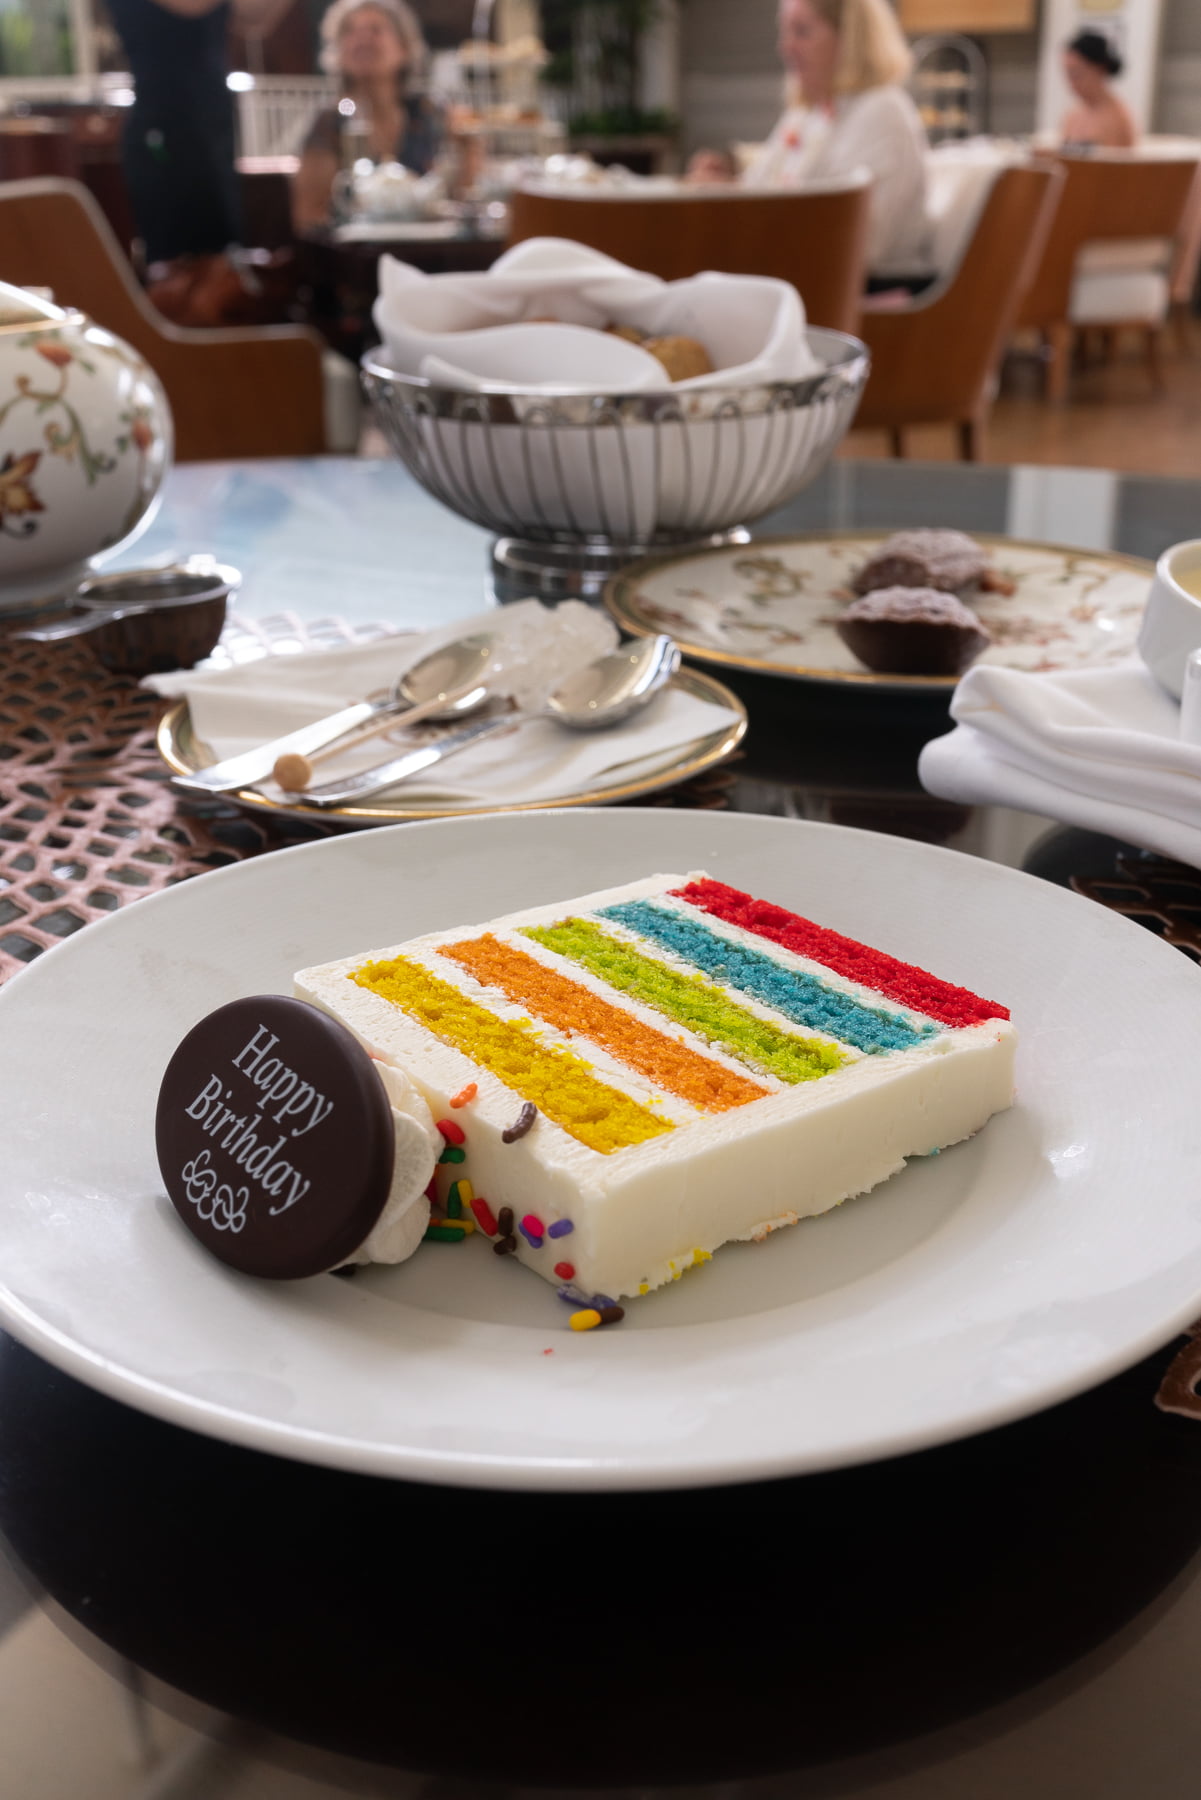 A slice of birthday cake at Kahala Hotel's afternoon tea.